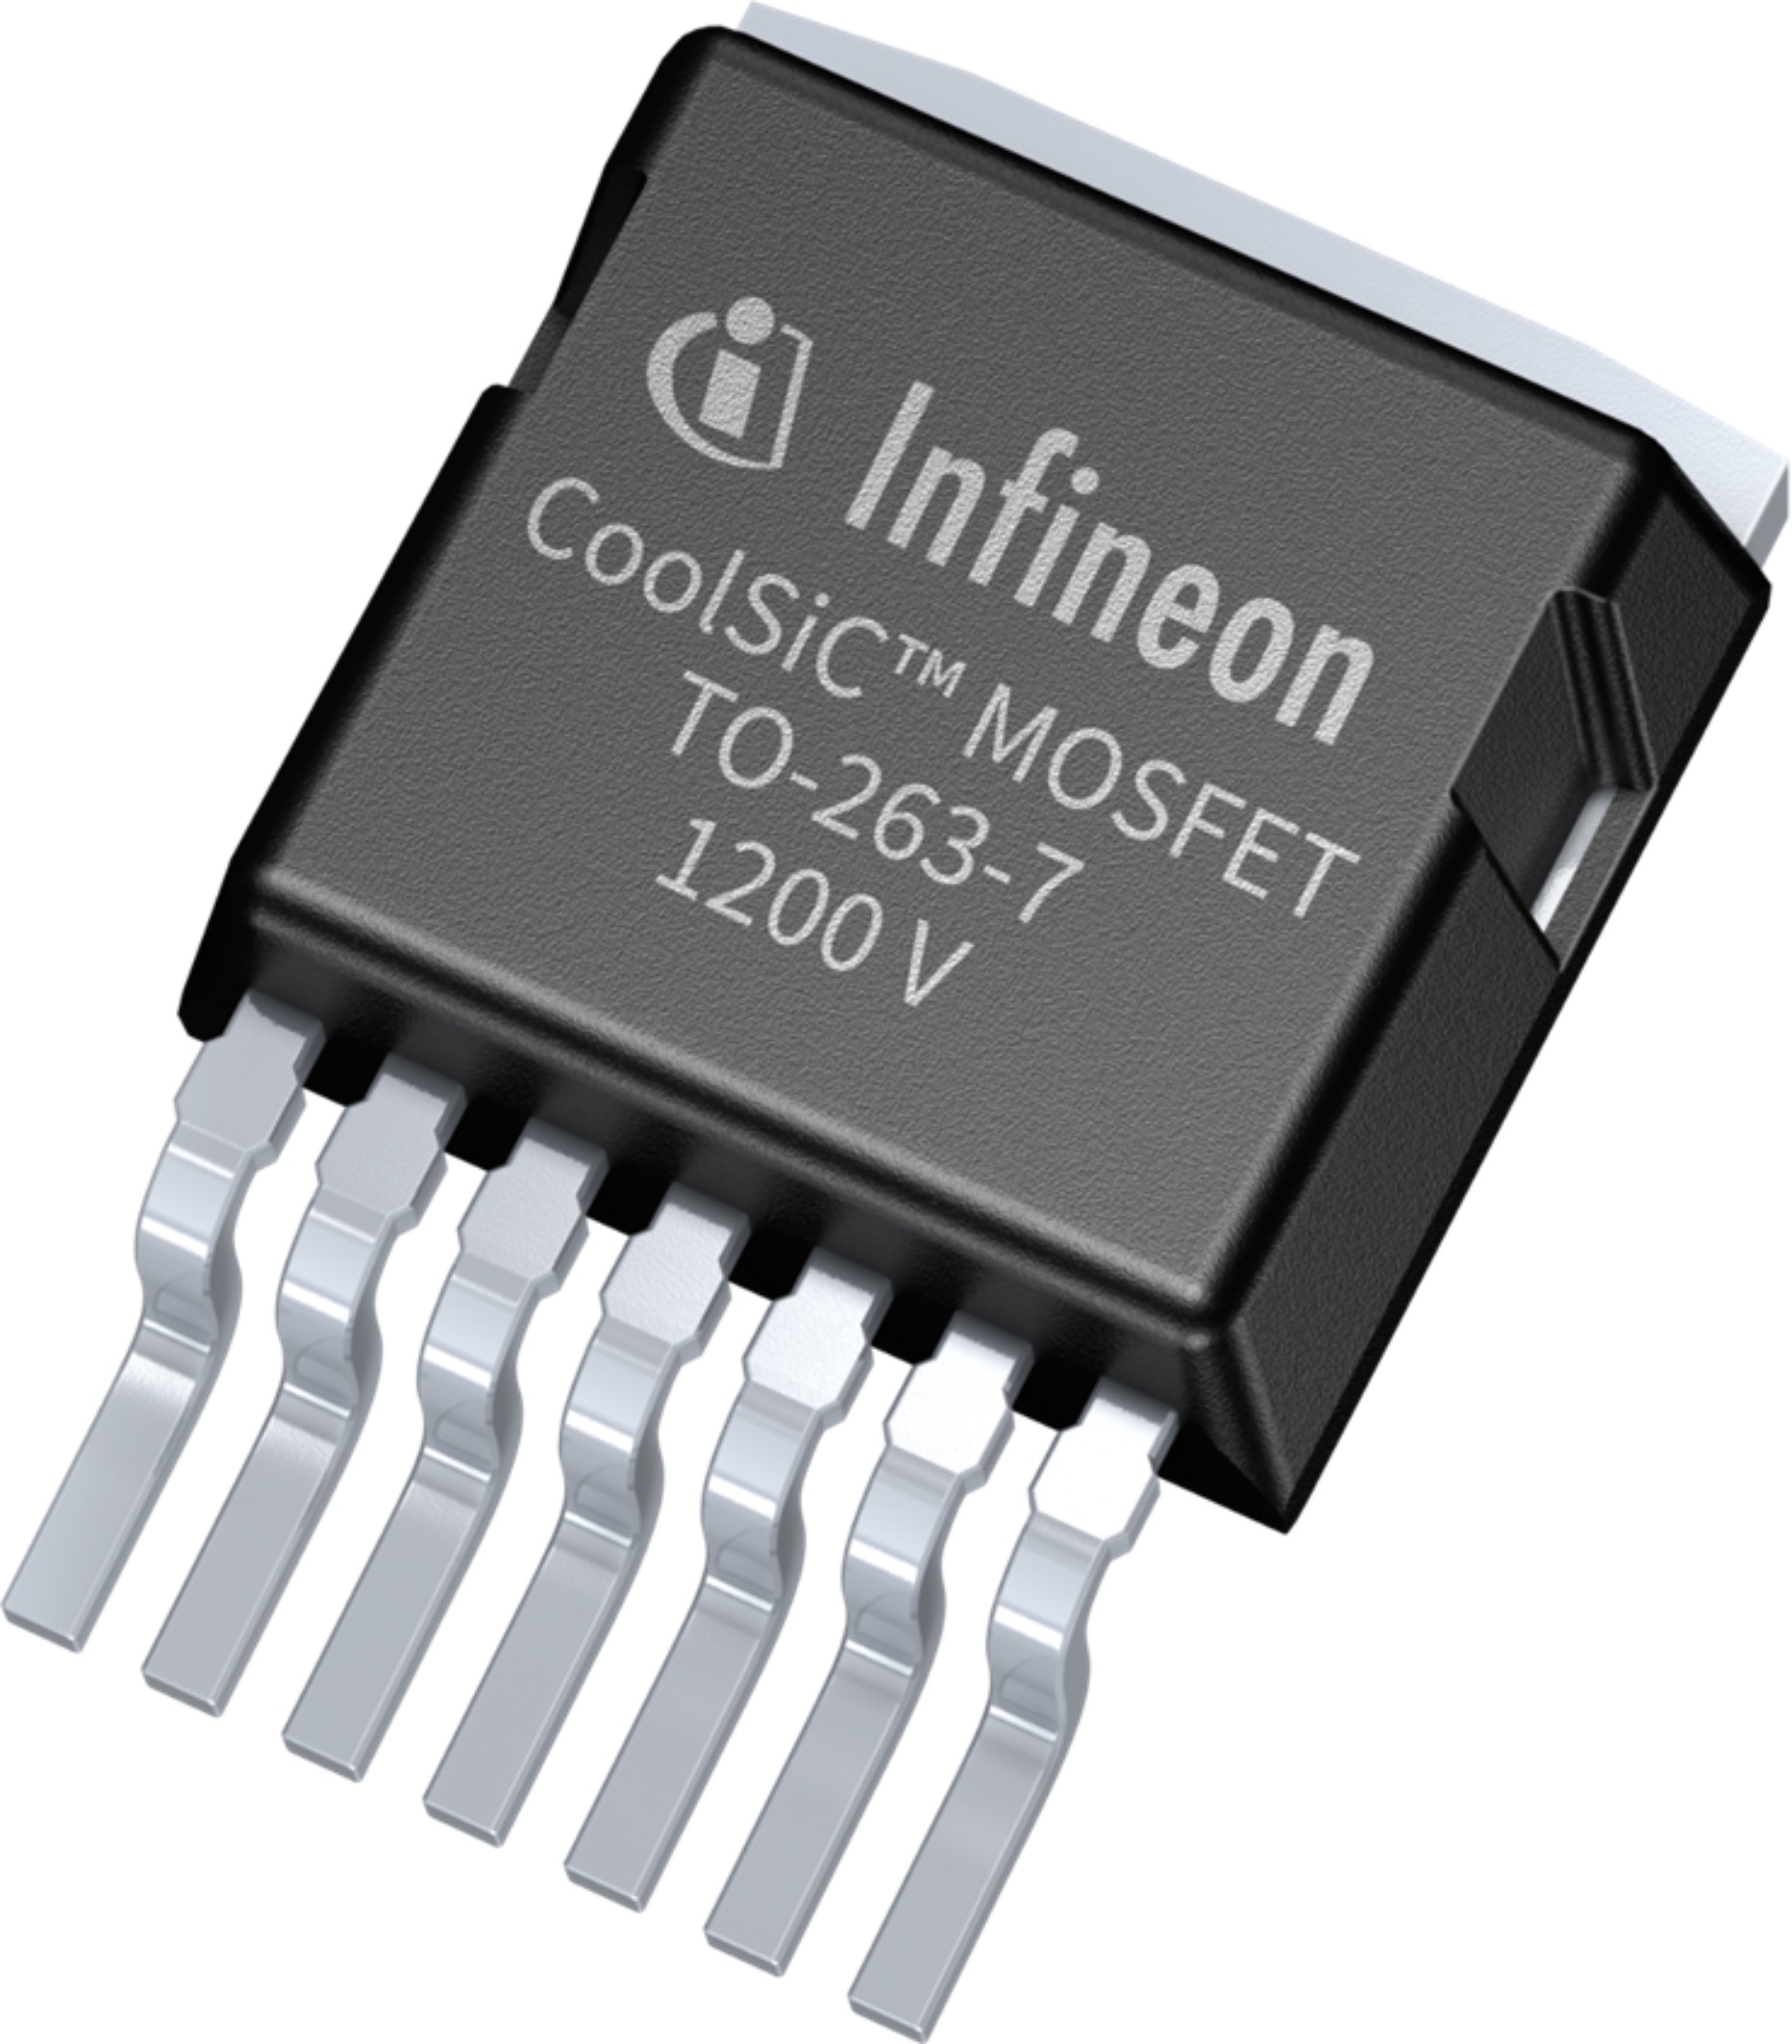 配图：英飞凌 1200 V CoolSiC™ MOSFET 产品.jpg